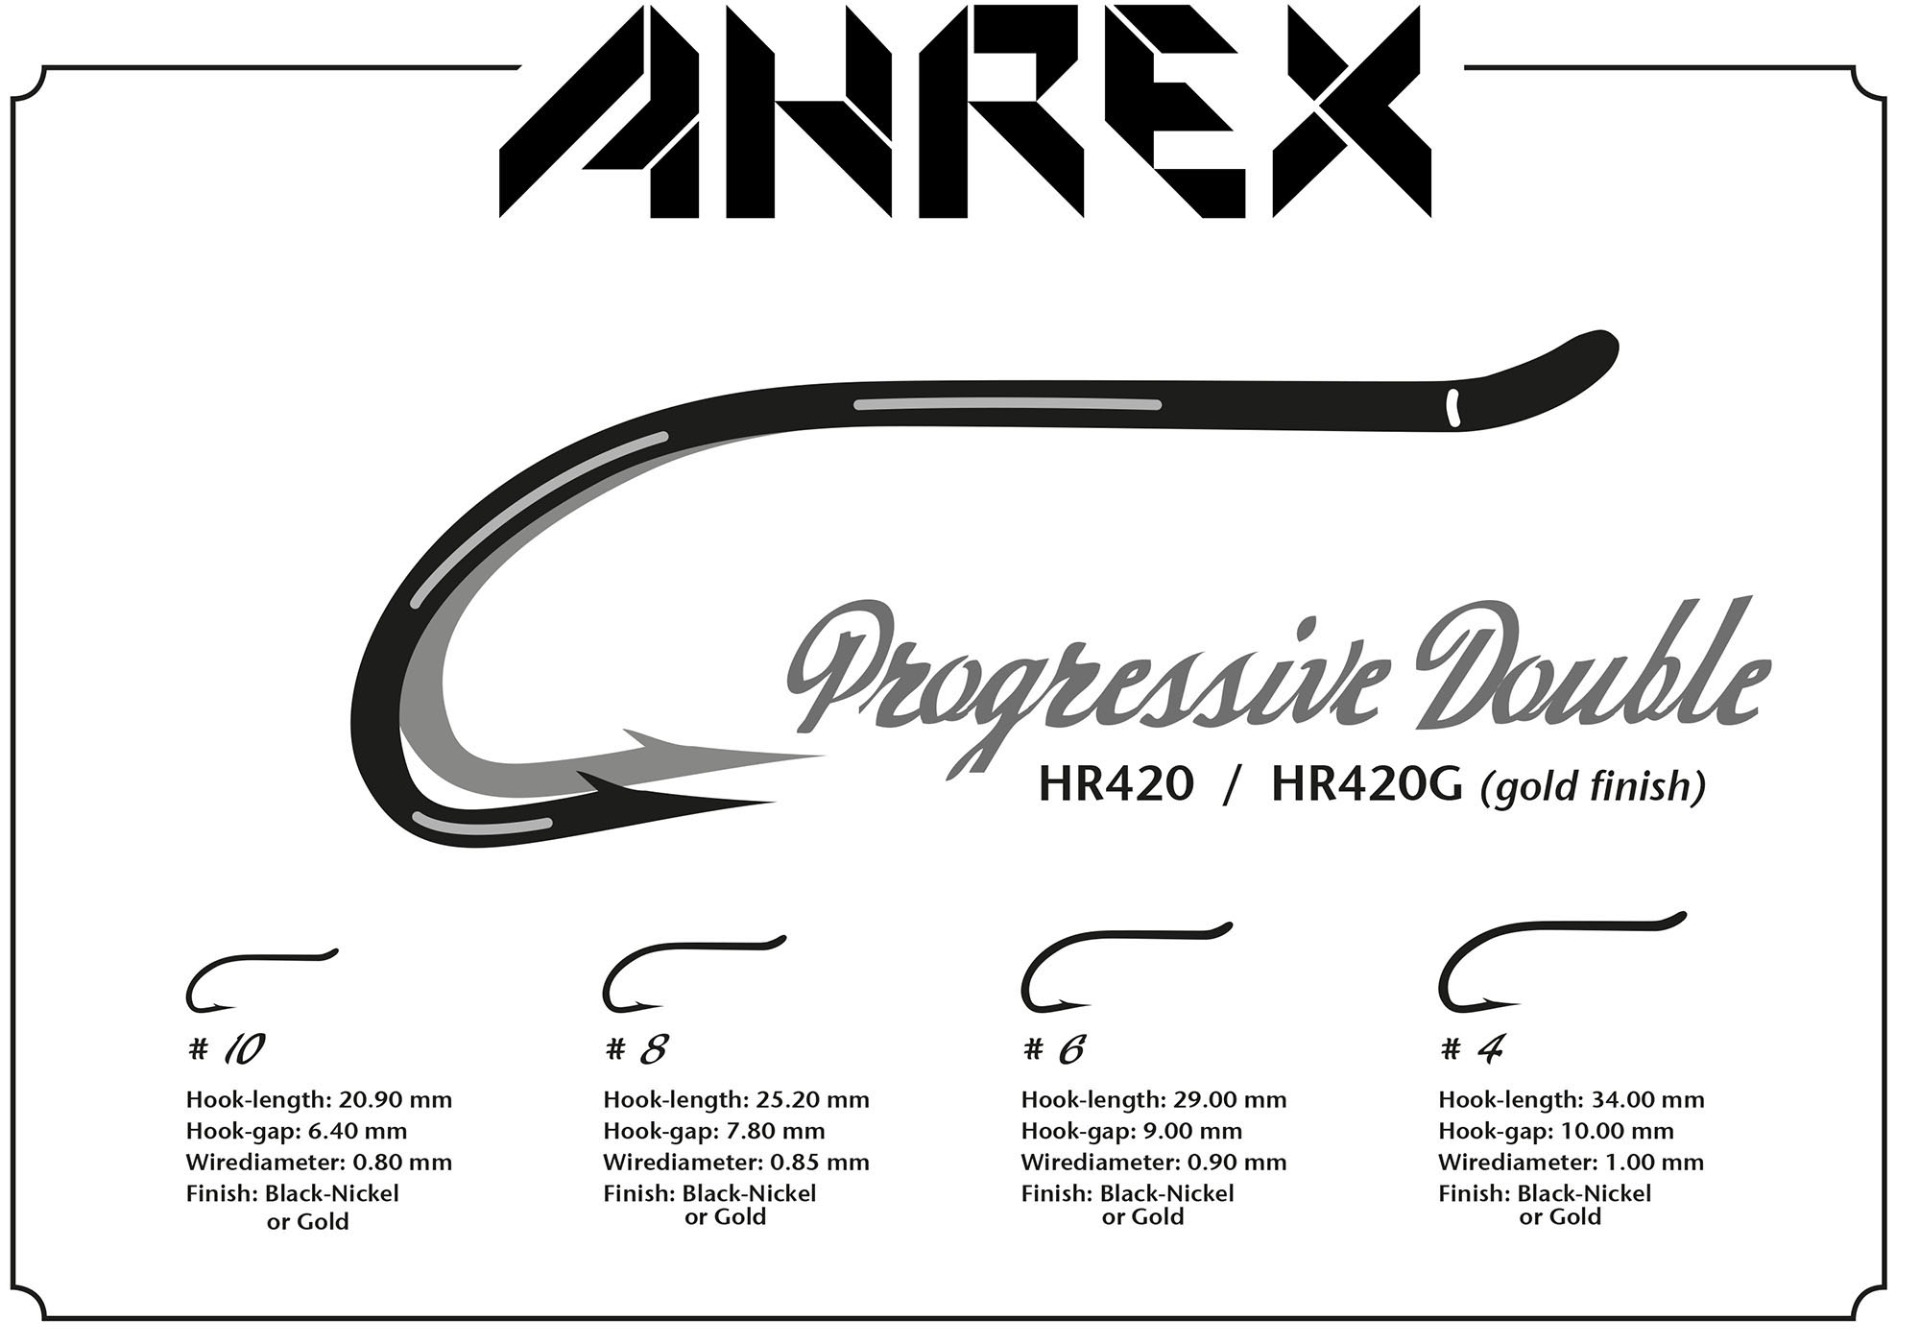 Ahrex Progressive Double Gold #8